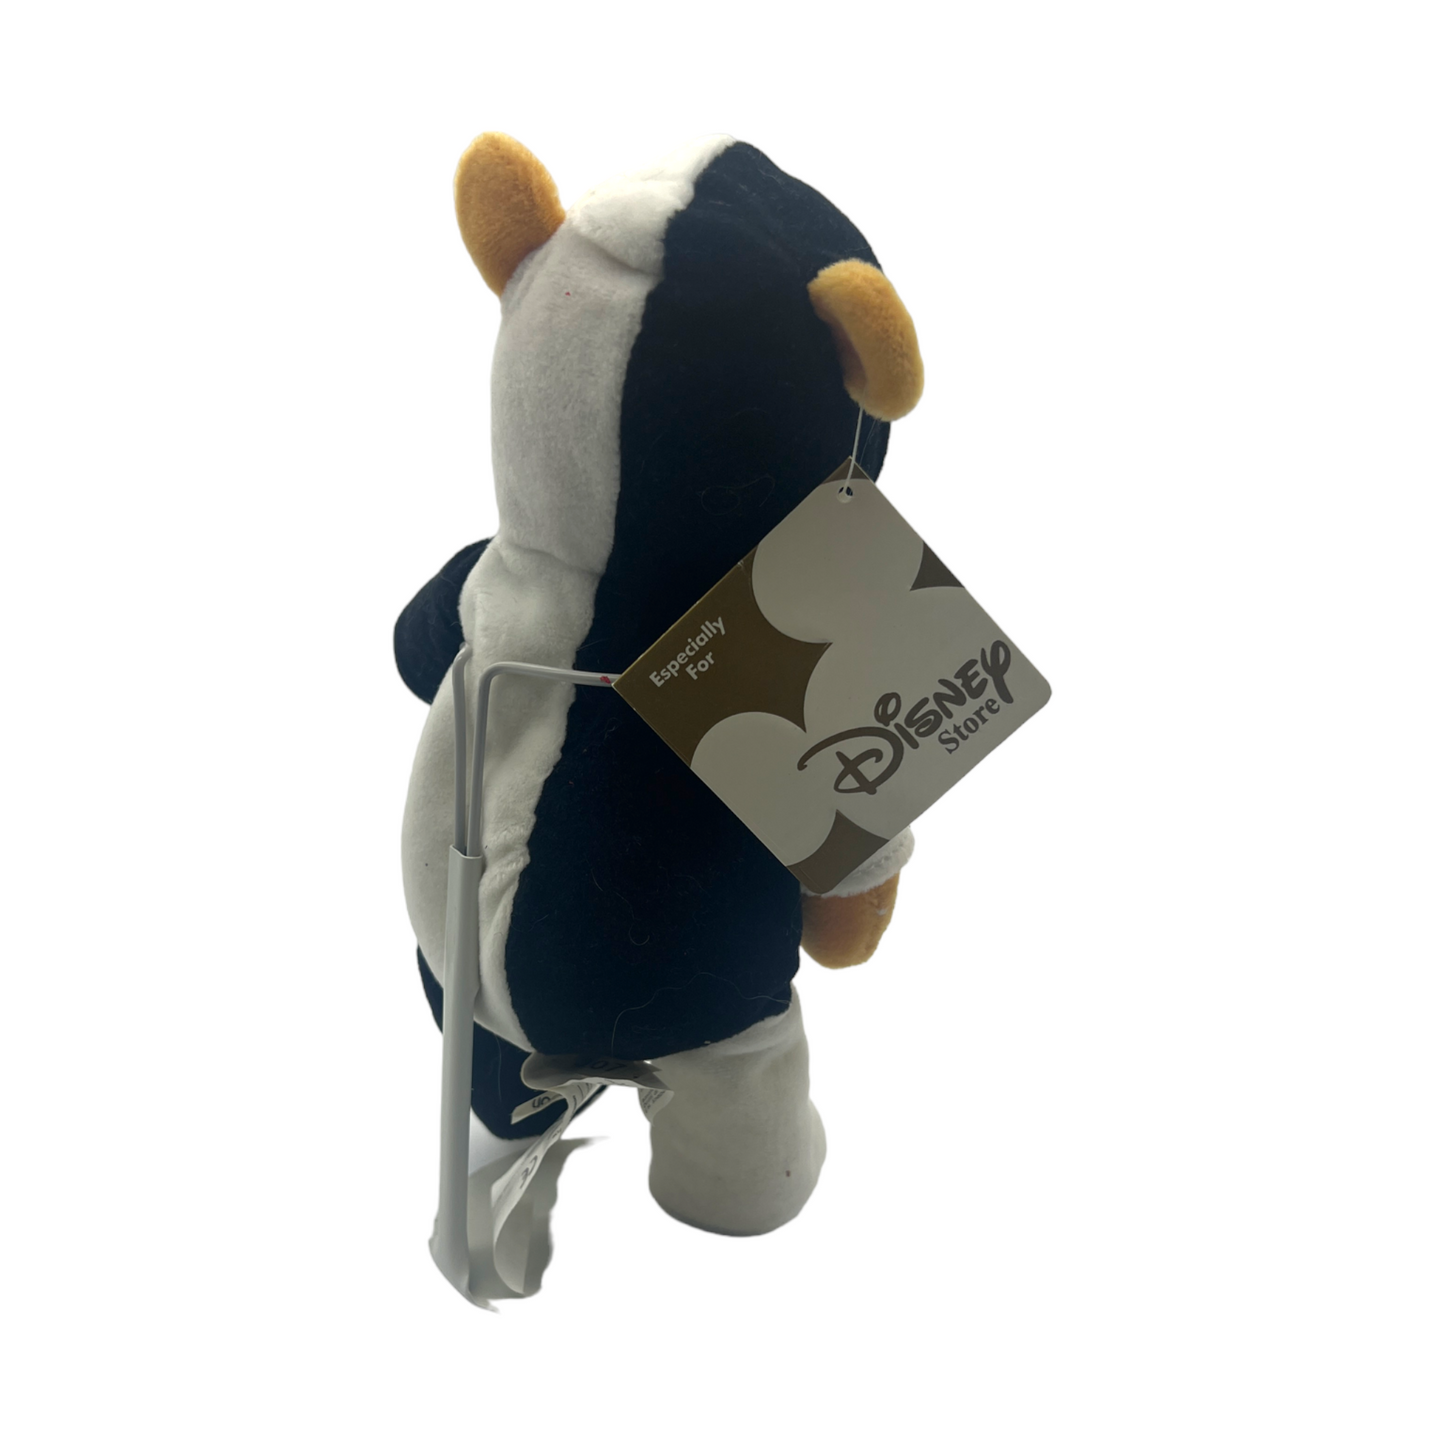 Disney Store - Gemini Pooh Mini Bean Bag - With Tag - 8"